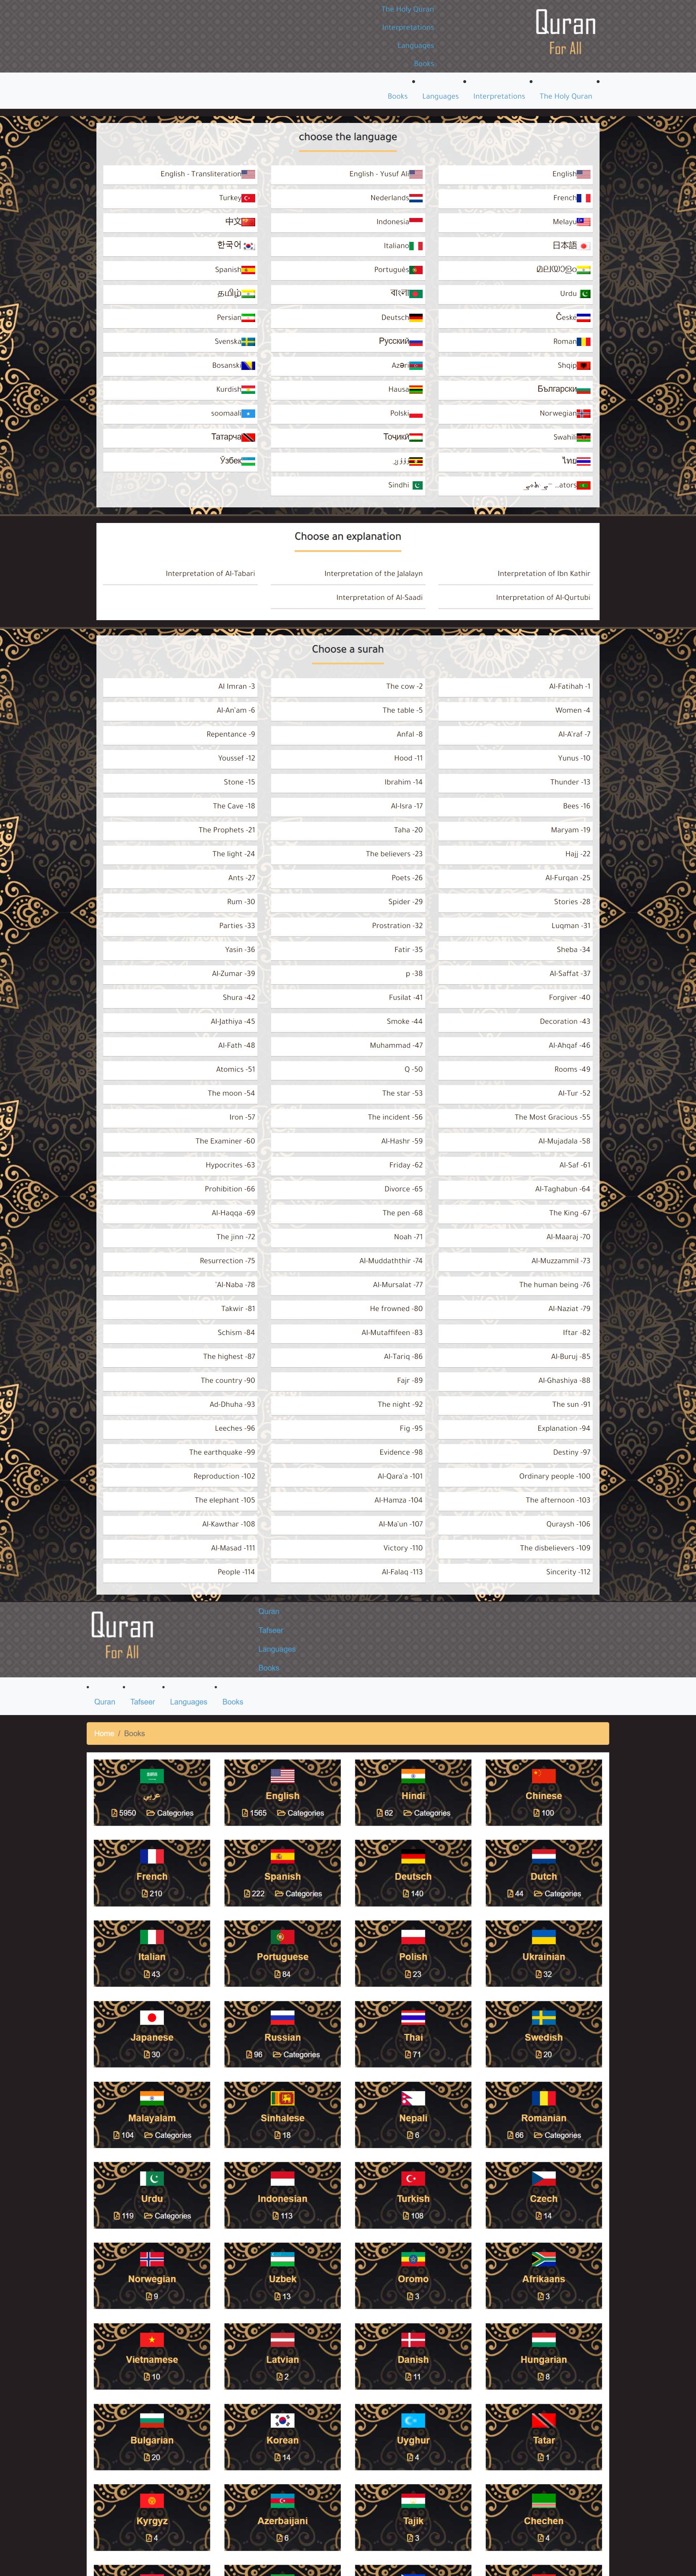 Al Quran Website portfoilio